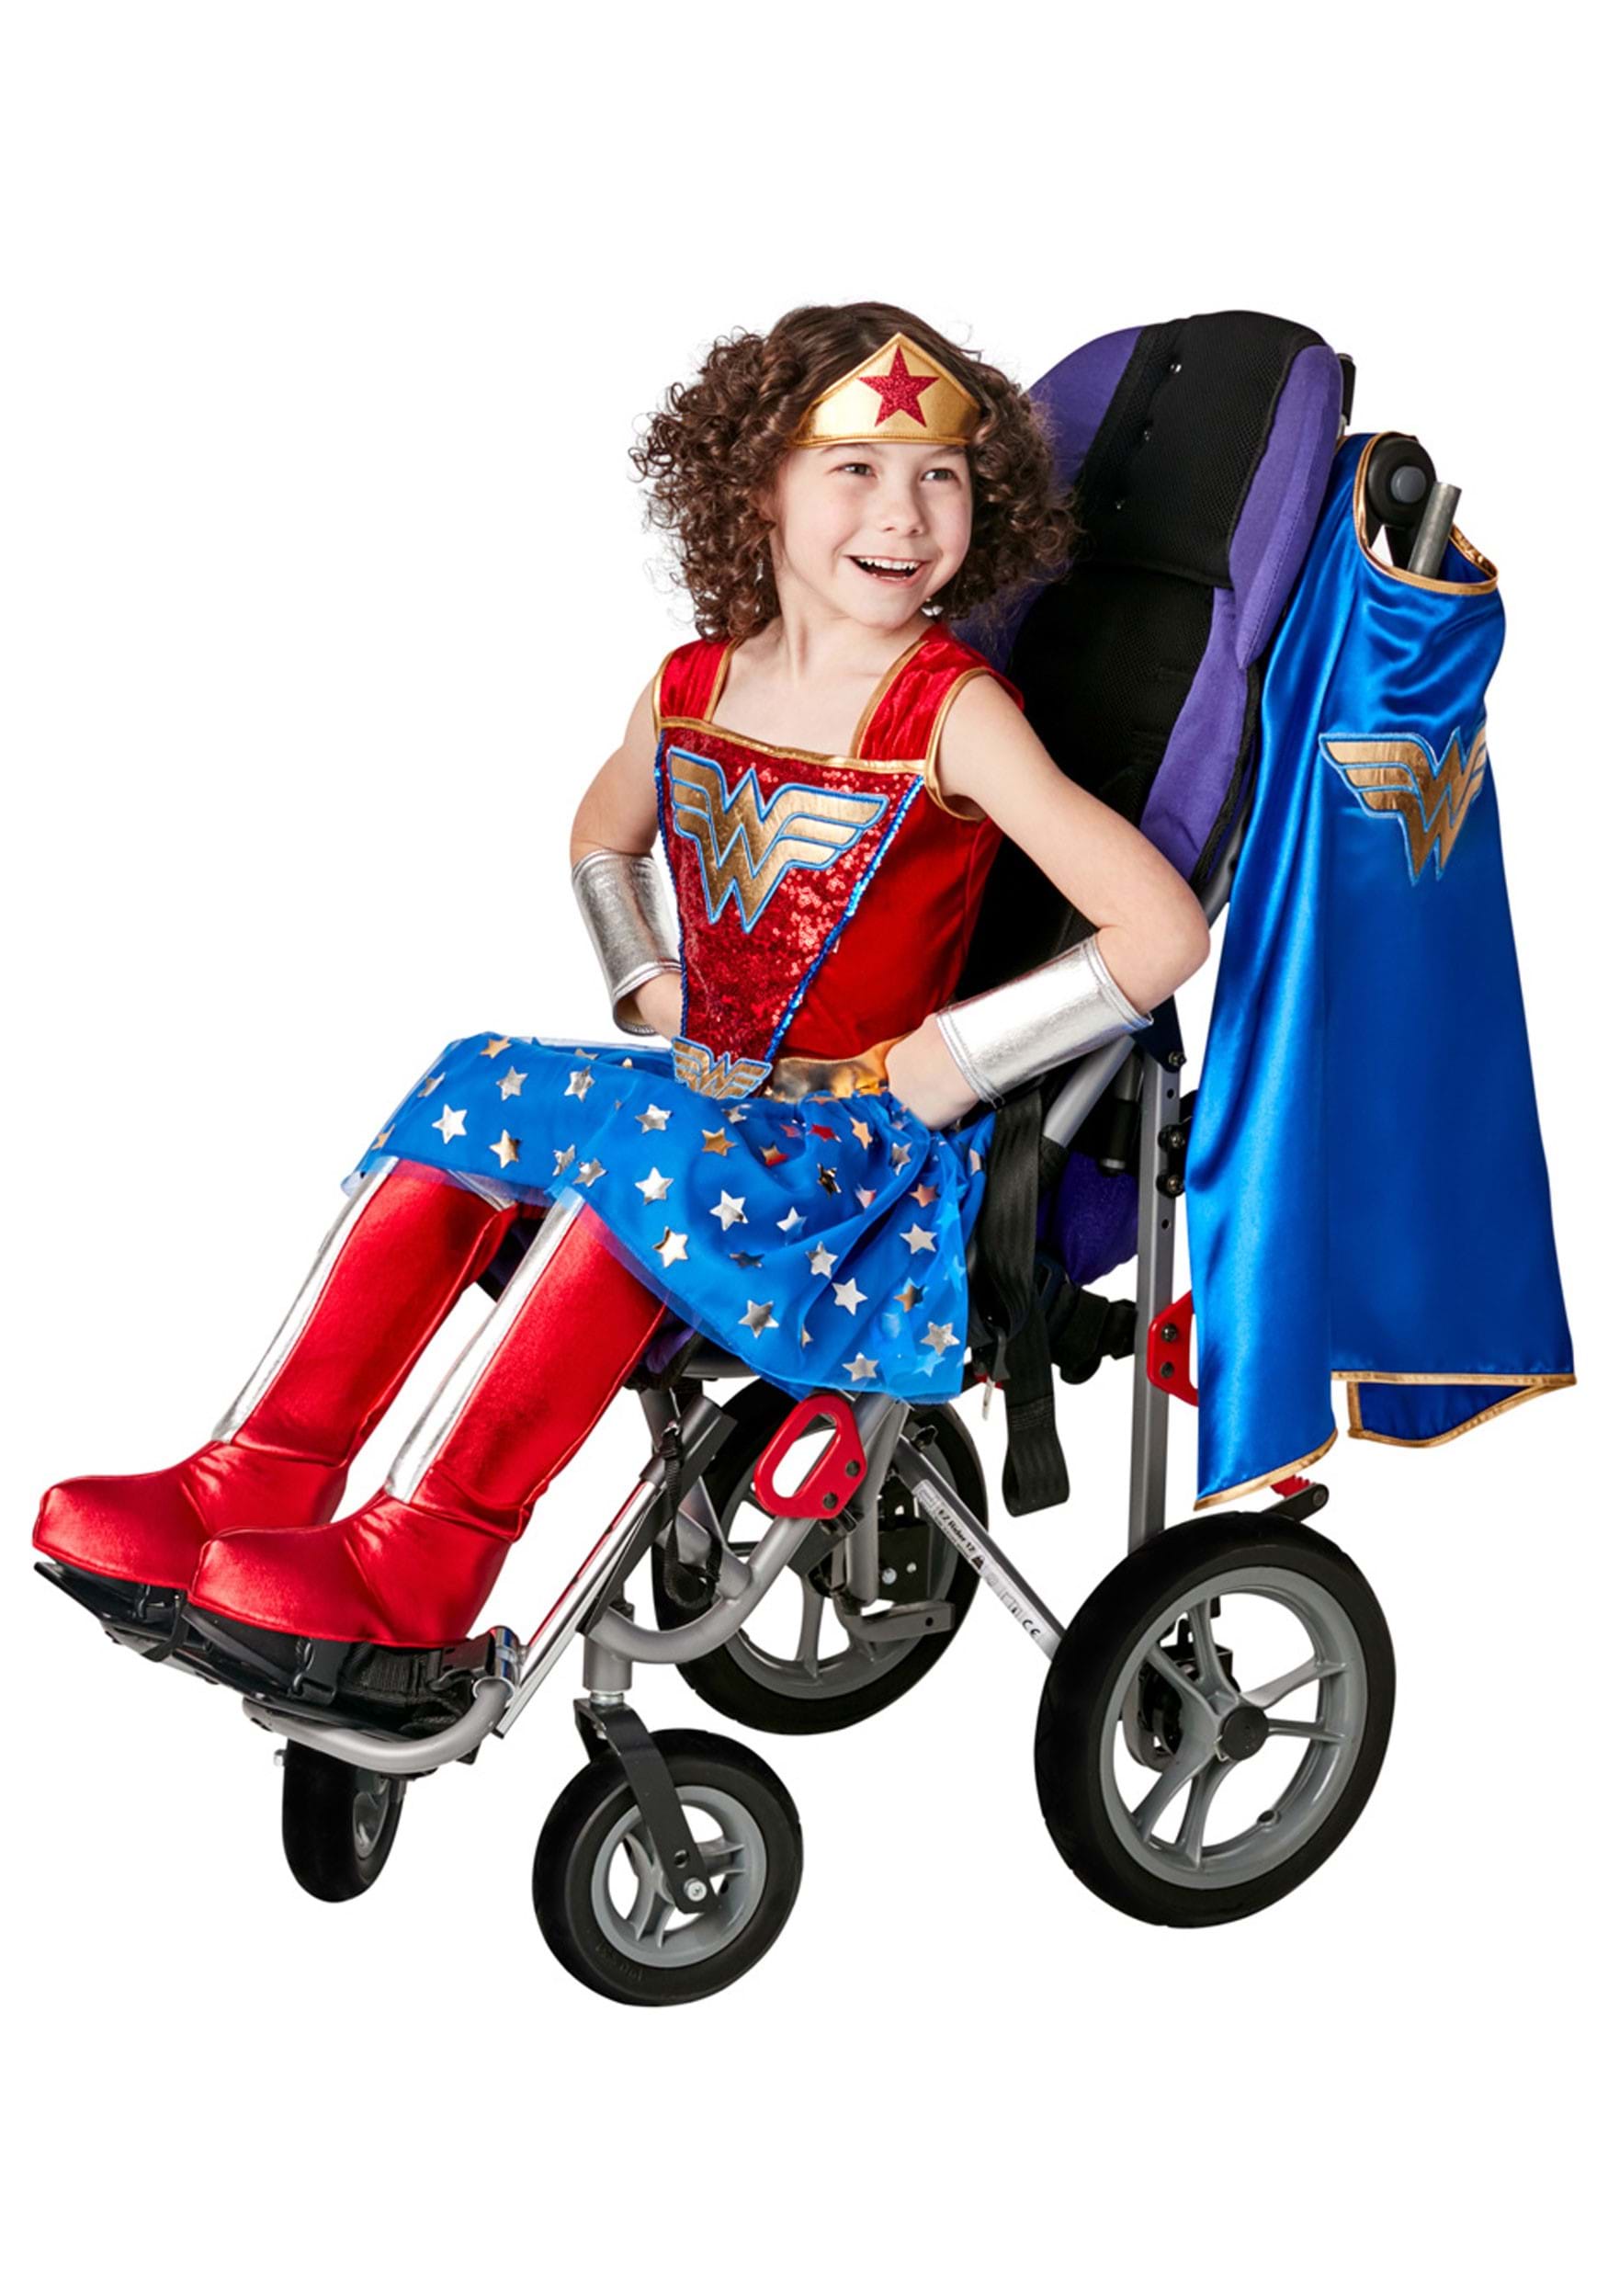 Adaptive Wonder Woman Costume for Kids | Wonder Women